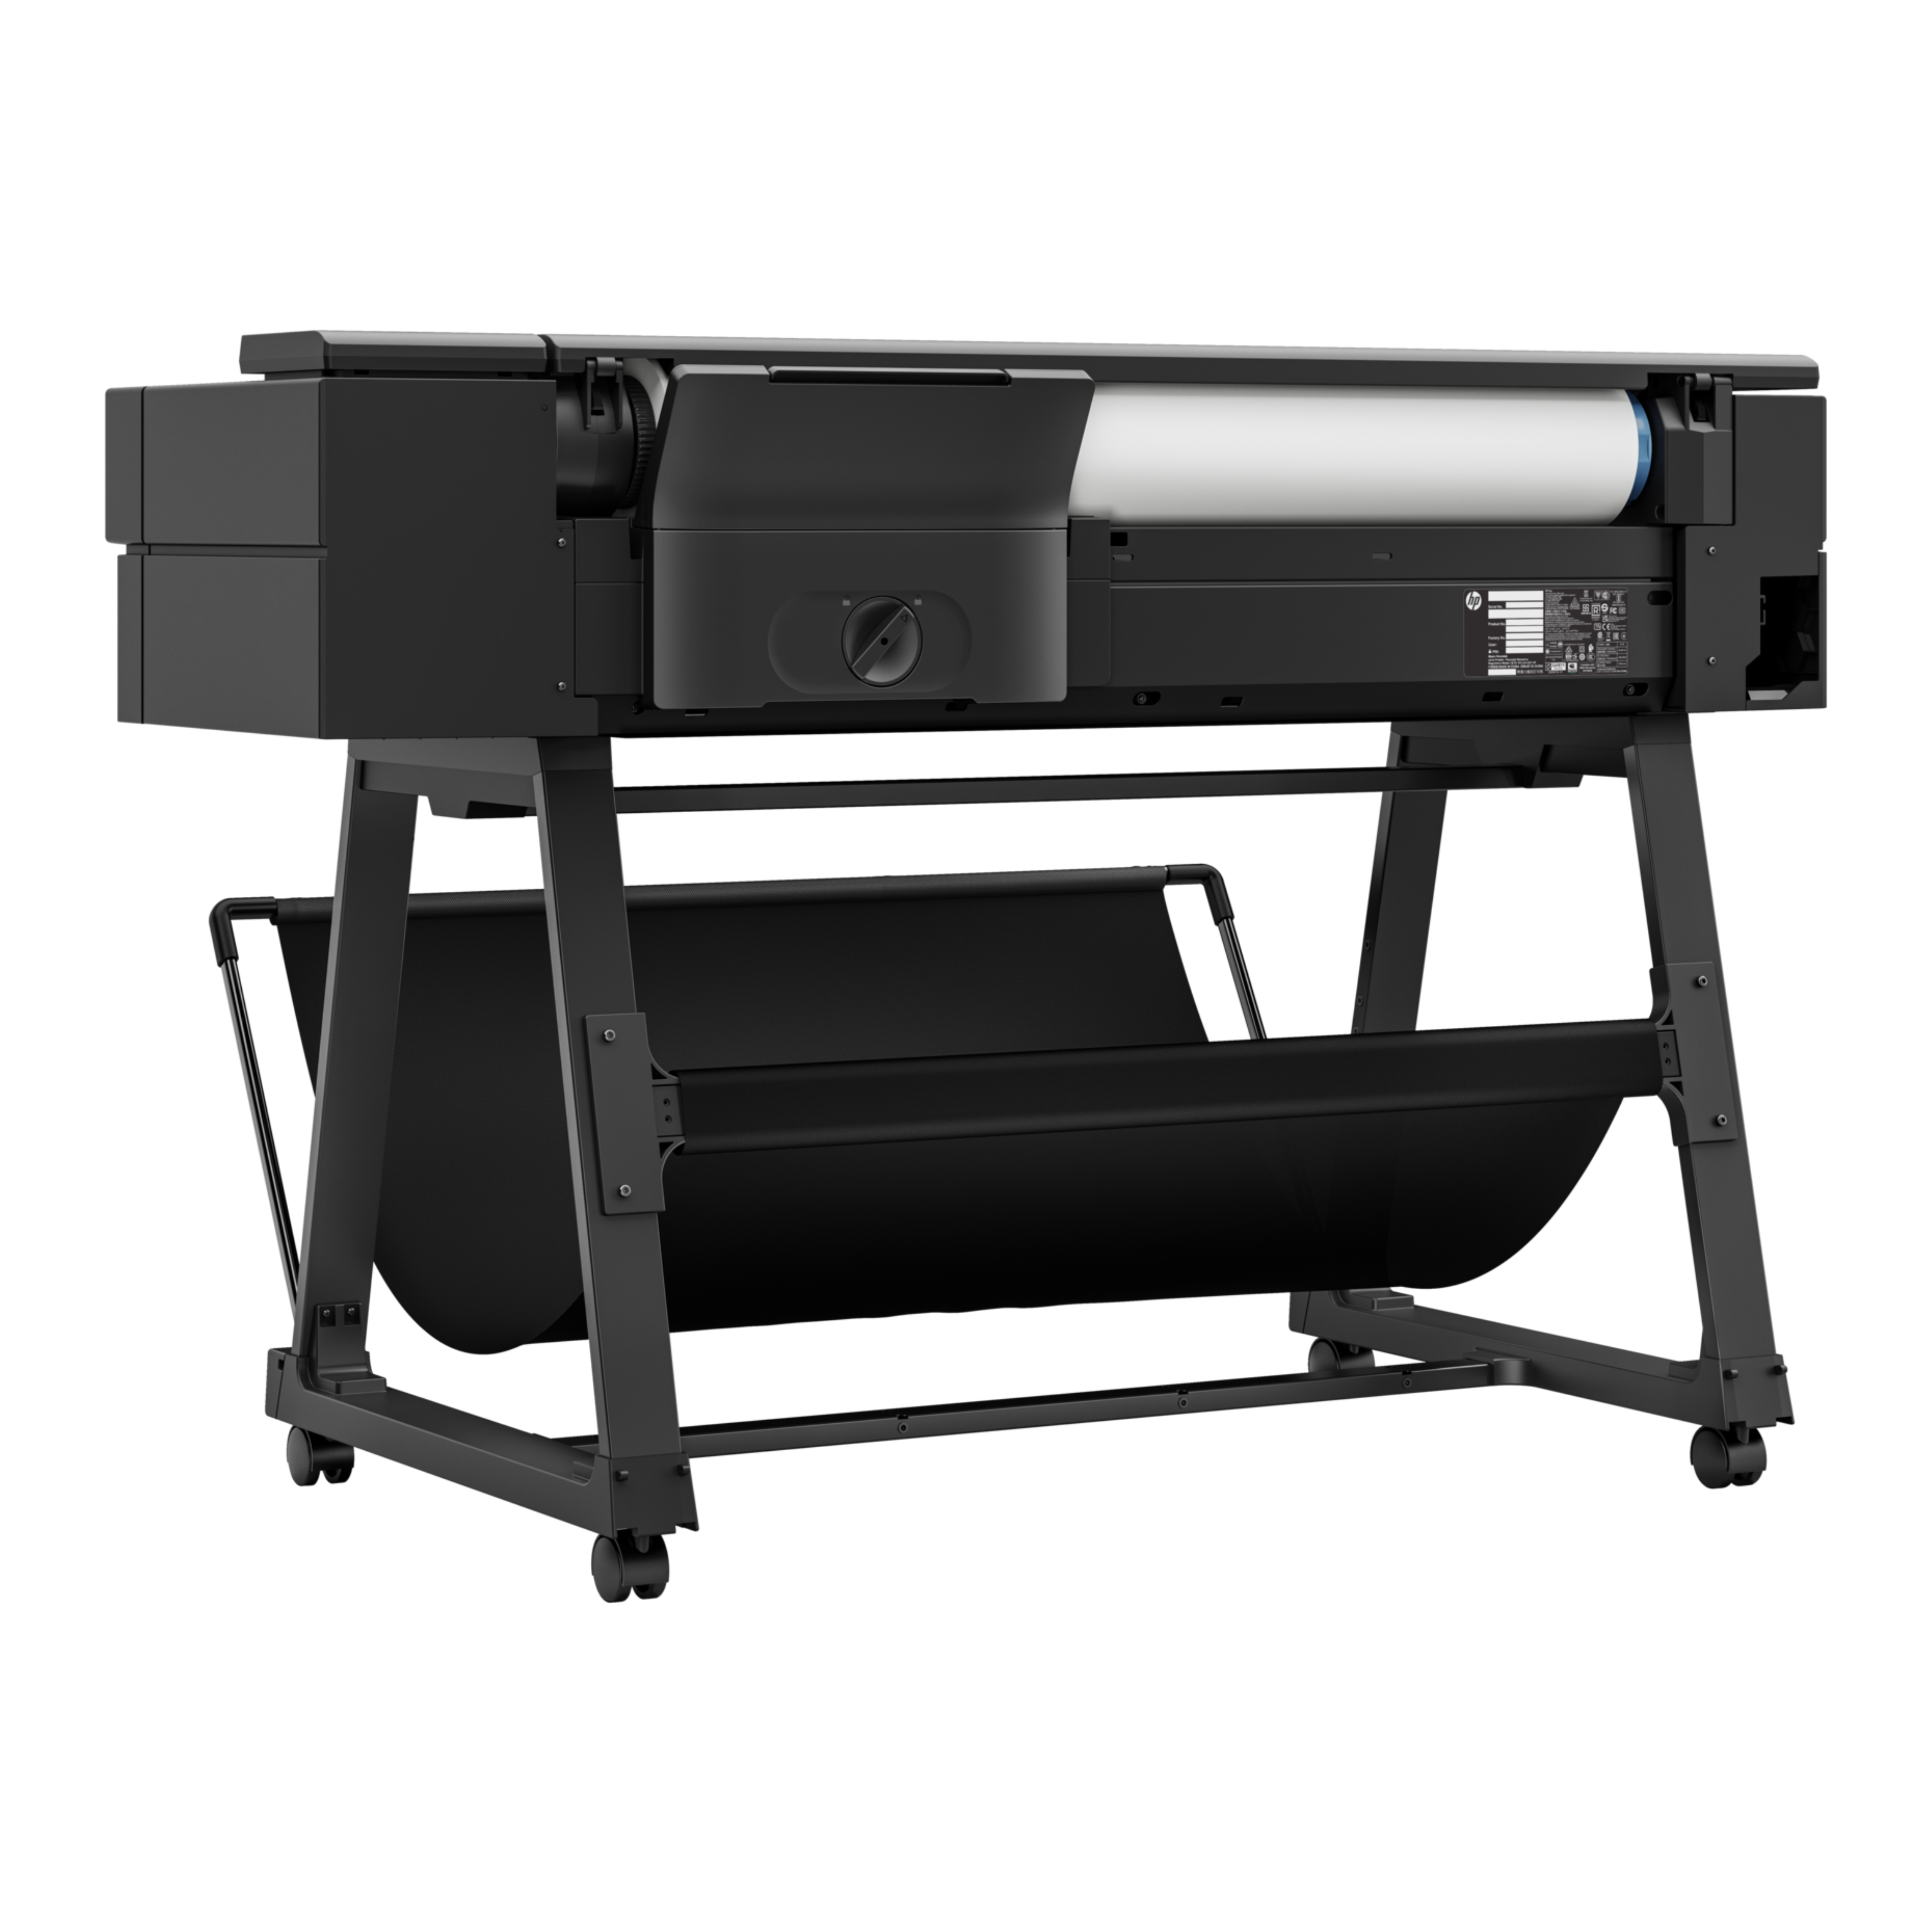 HP DesignJet T850 36-In Multifunction Printer (A0)